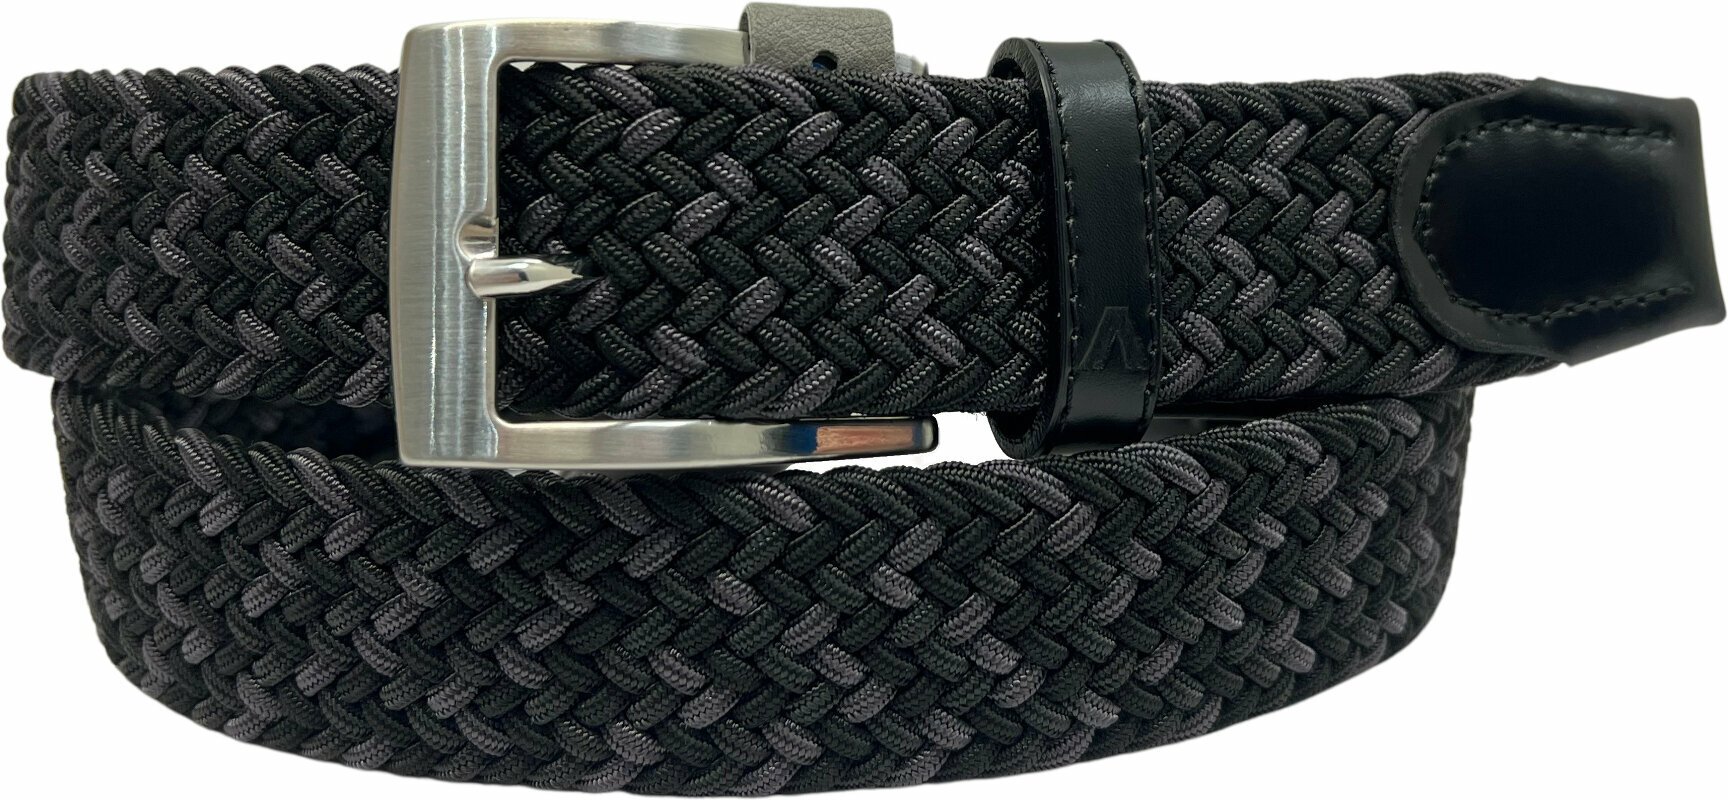 Cinture Alberto Gürtel Multicolor Braided Belt Black/Grey 100